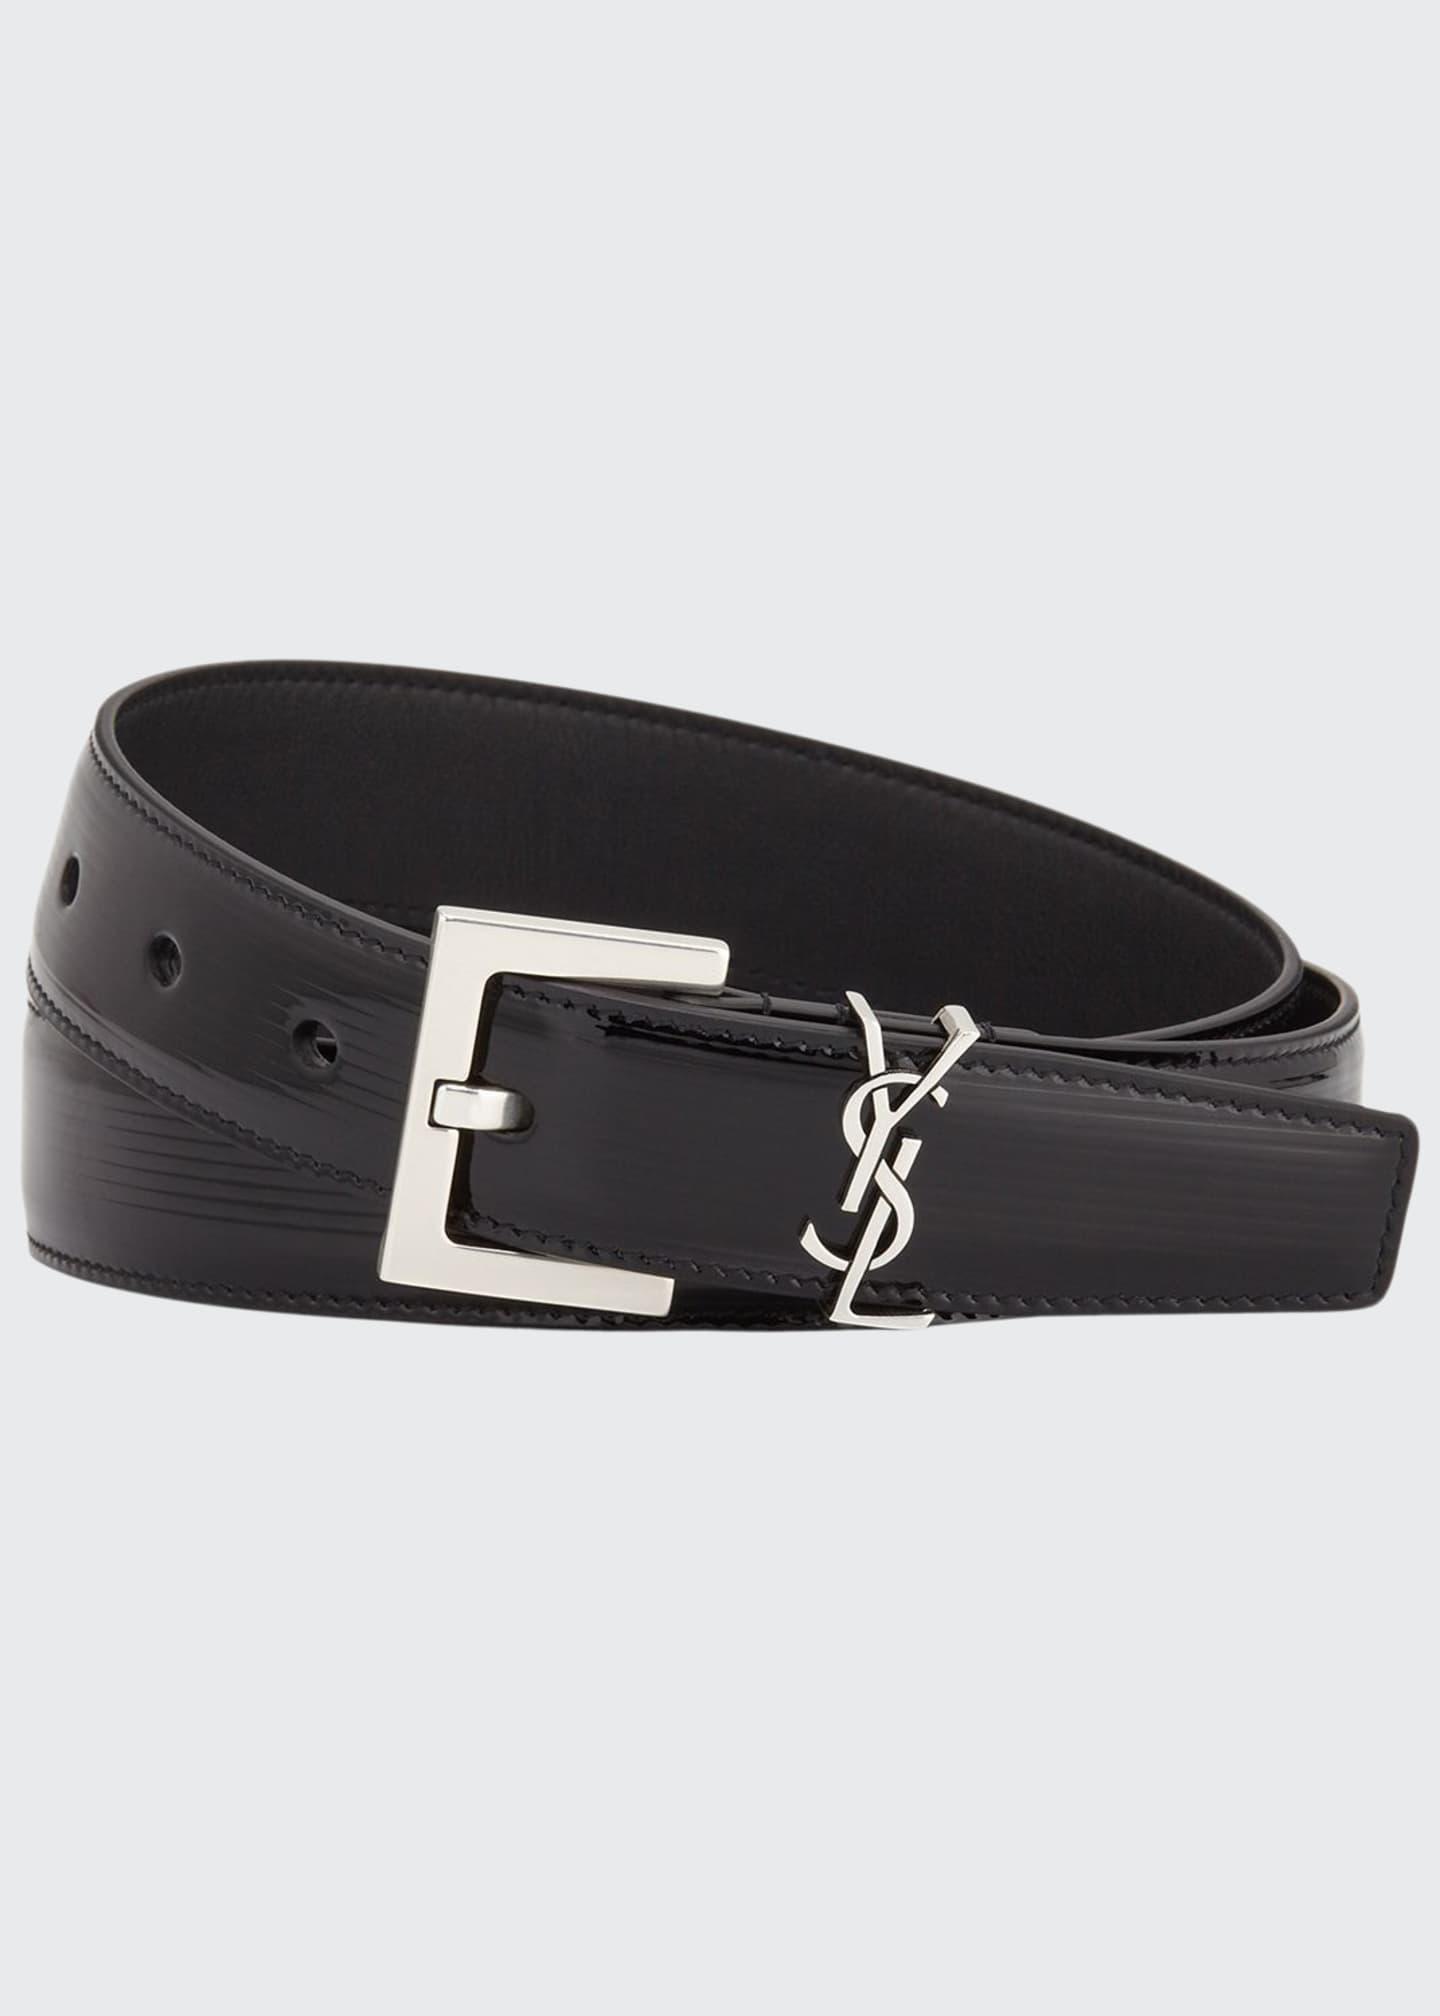 Saint Laurent Ysl Monogram Textured Patent Leather Belt in Black - Lyst